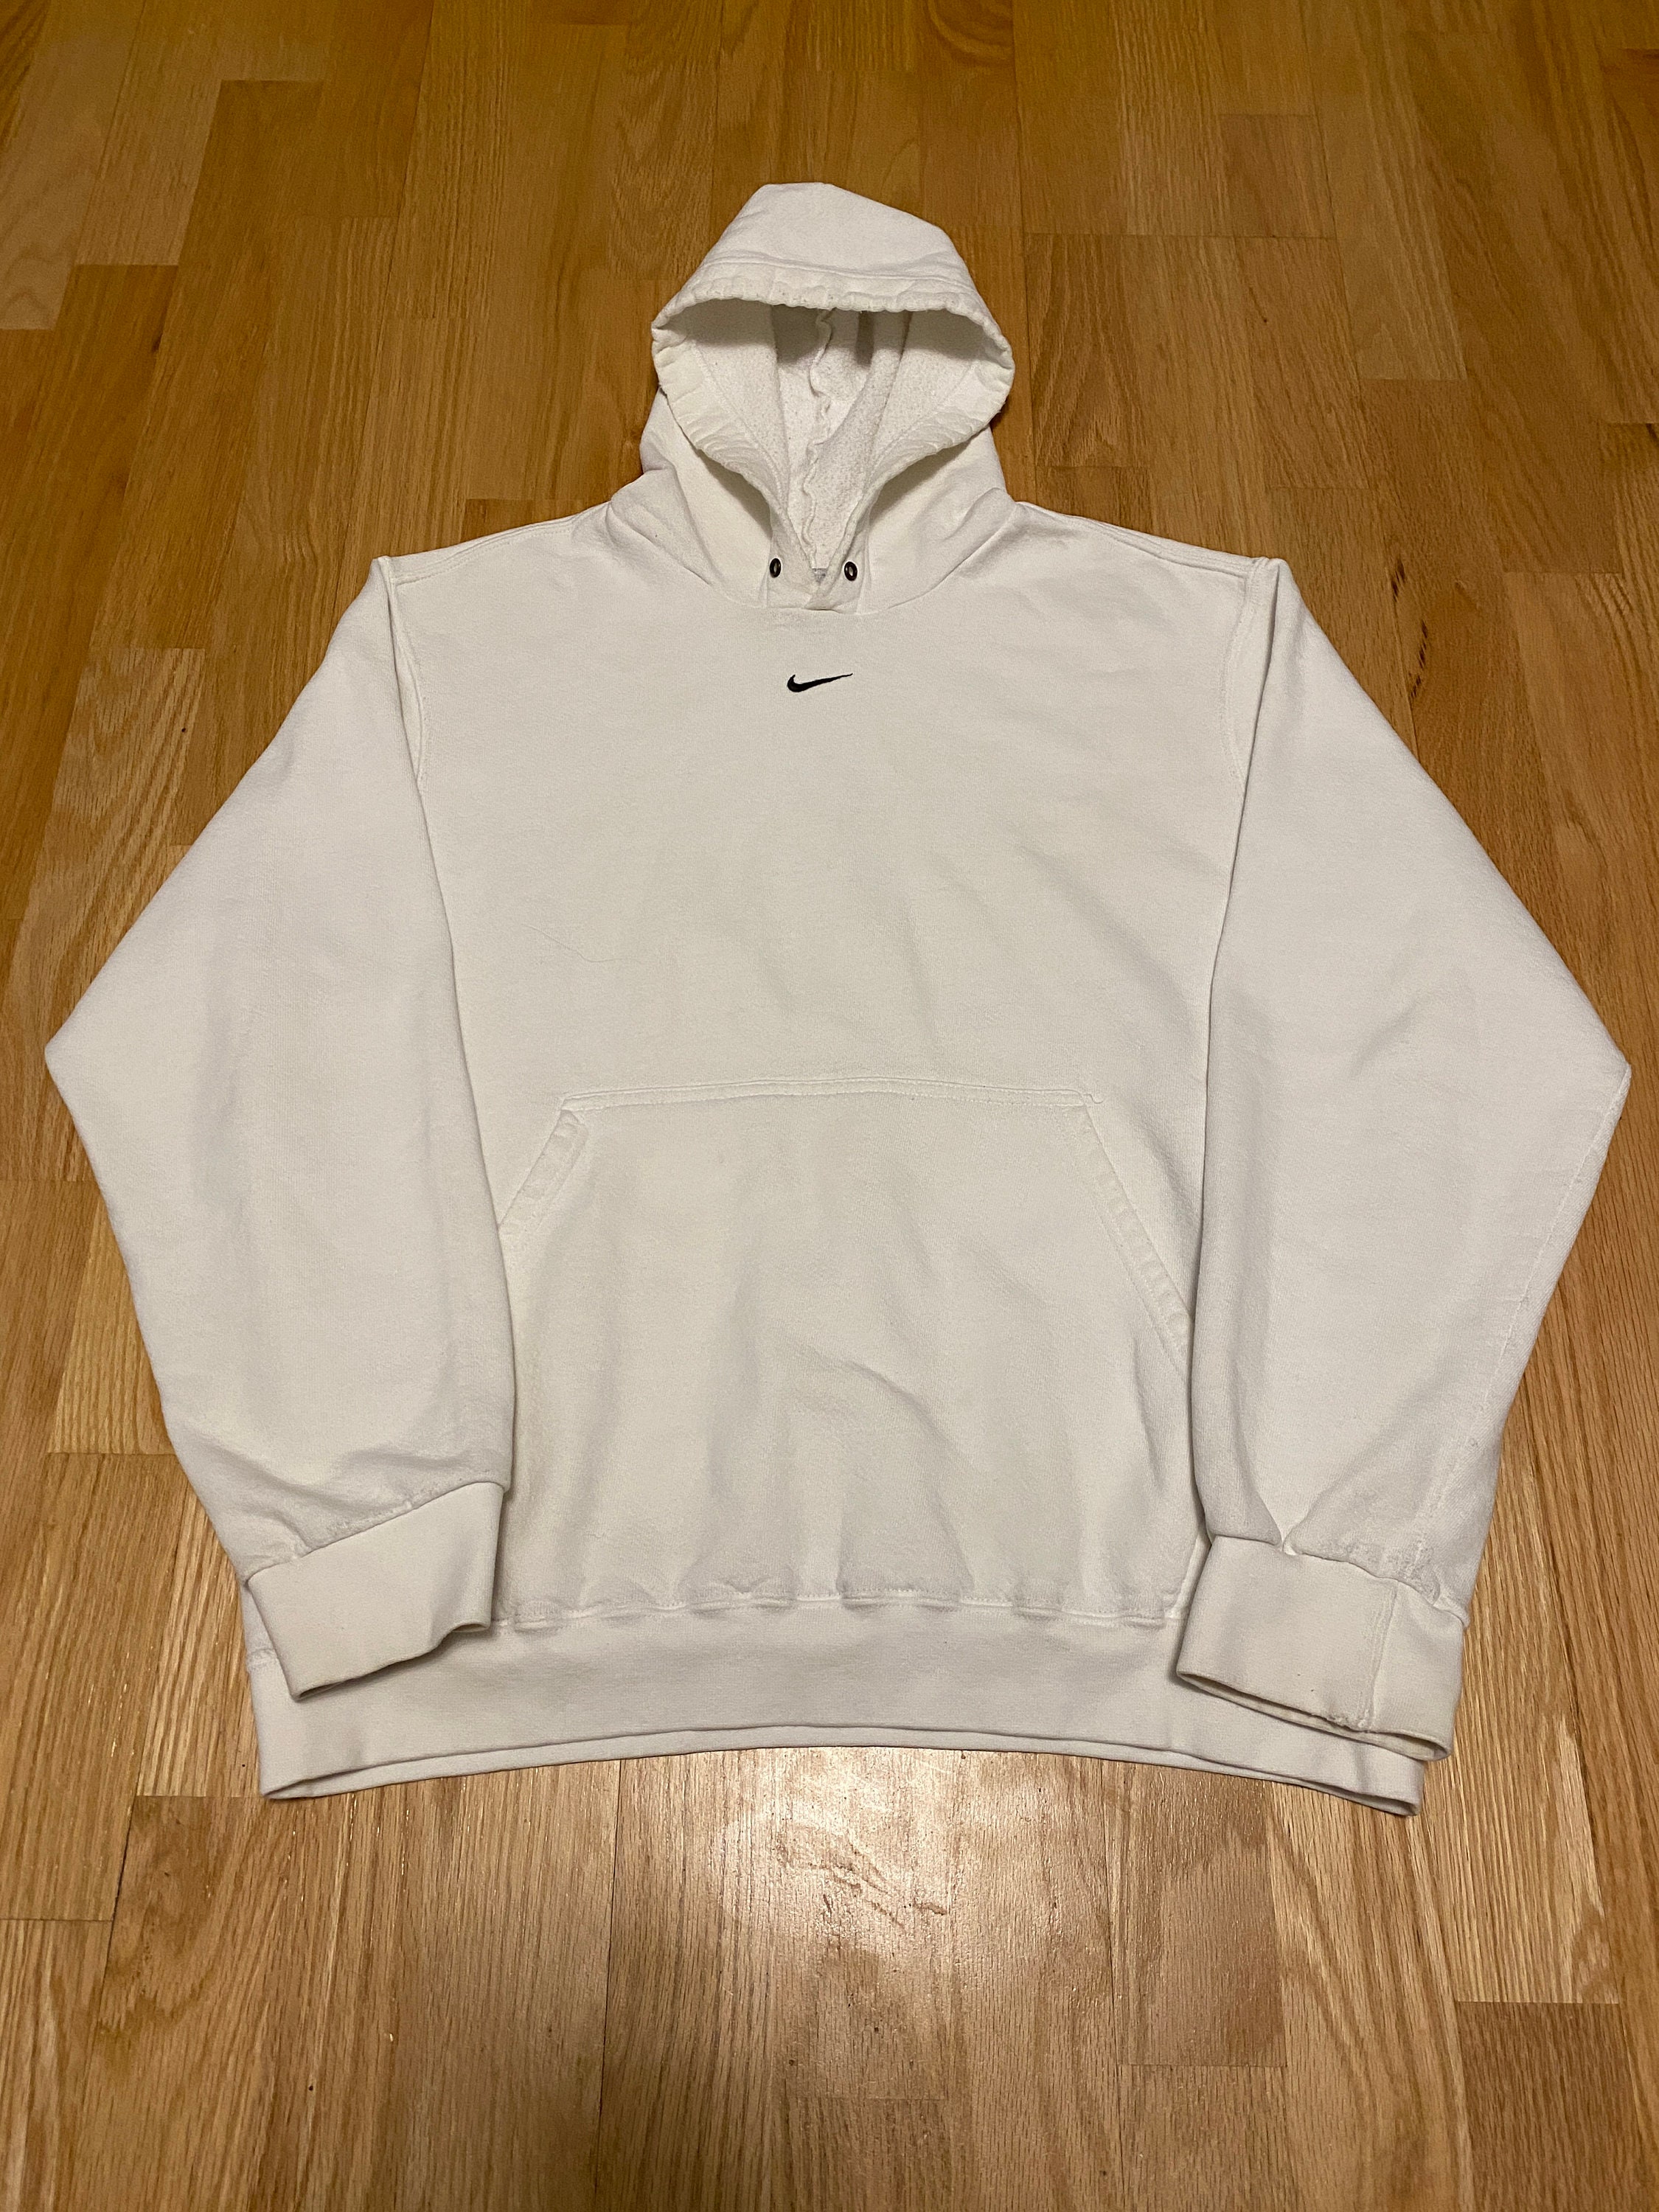 Vintage Nike White Black Center Check Hoodie Sweatshirt size | Etsy